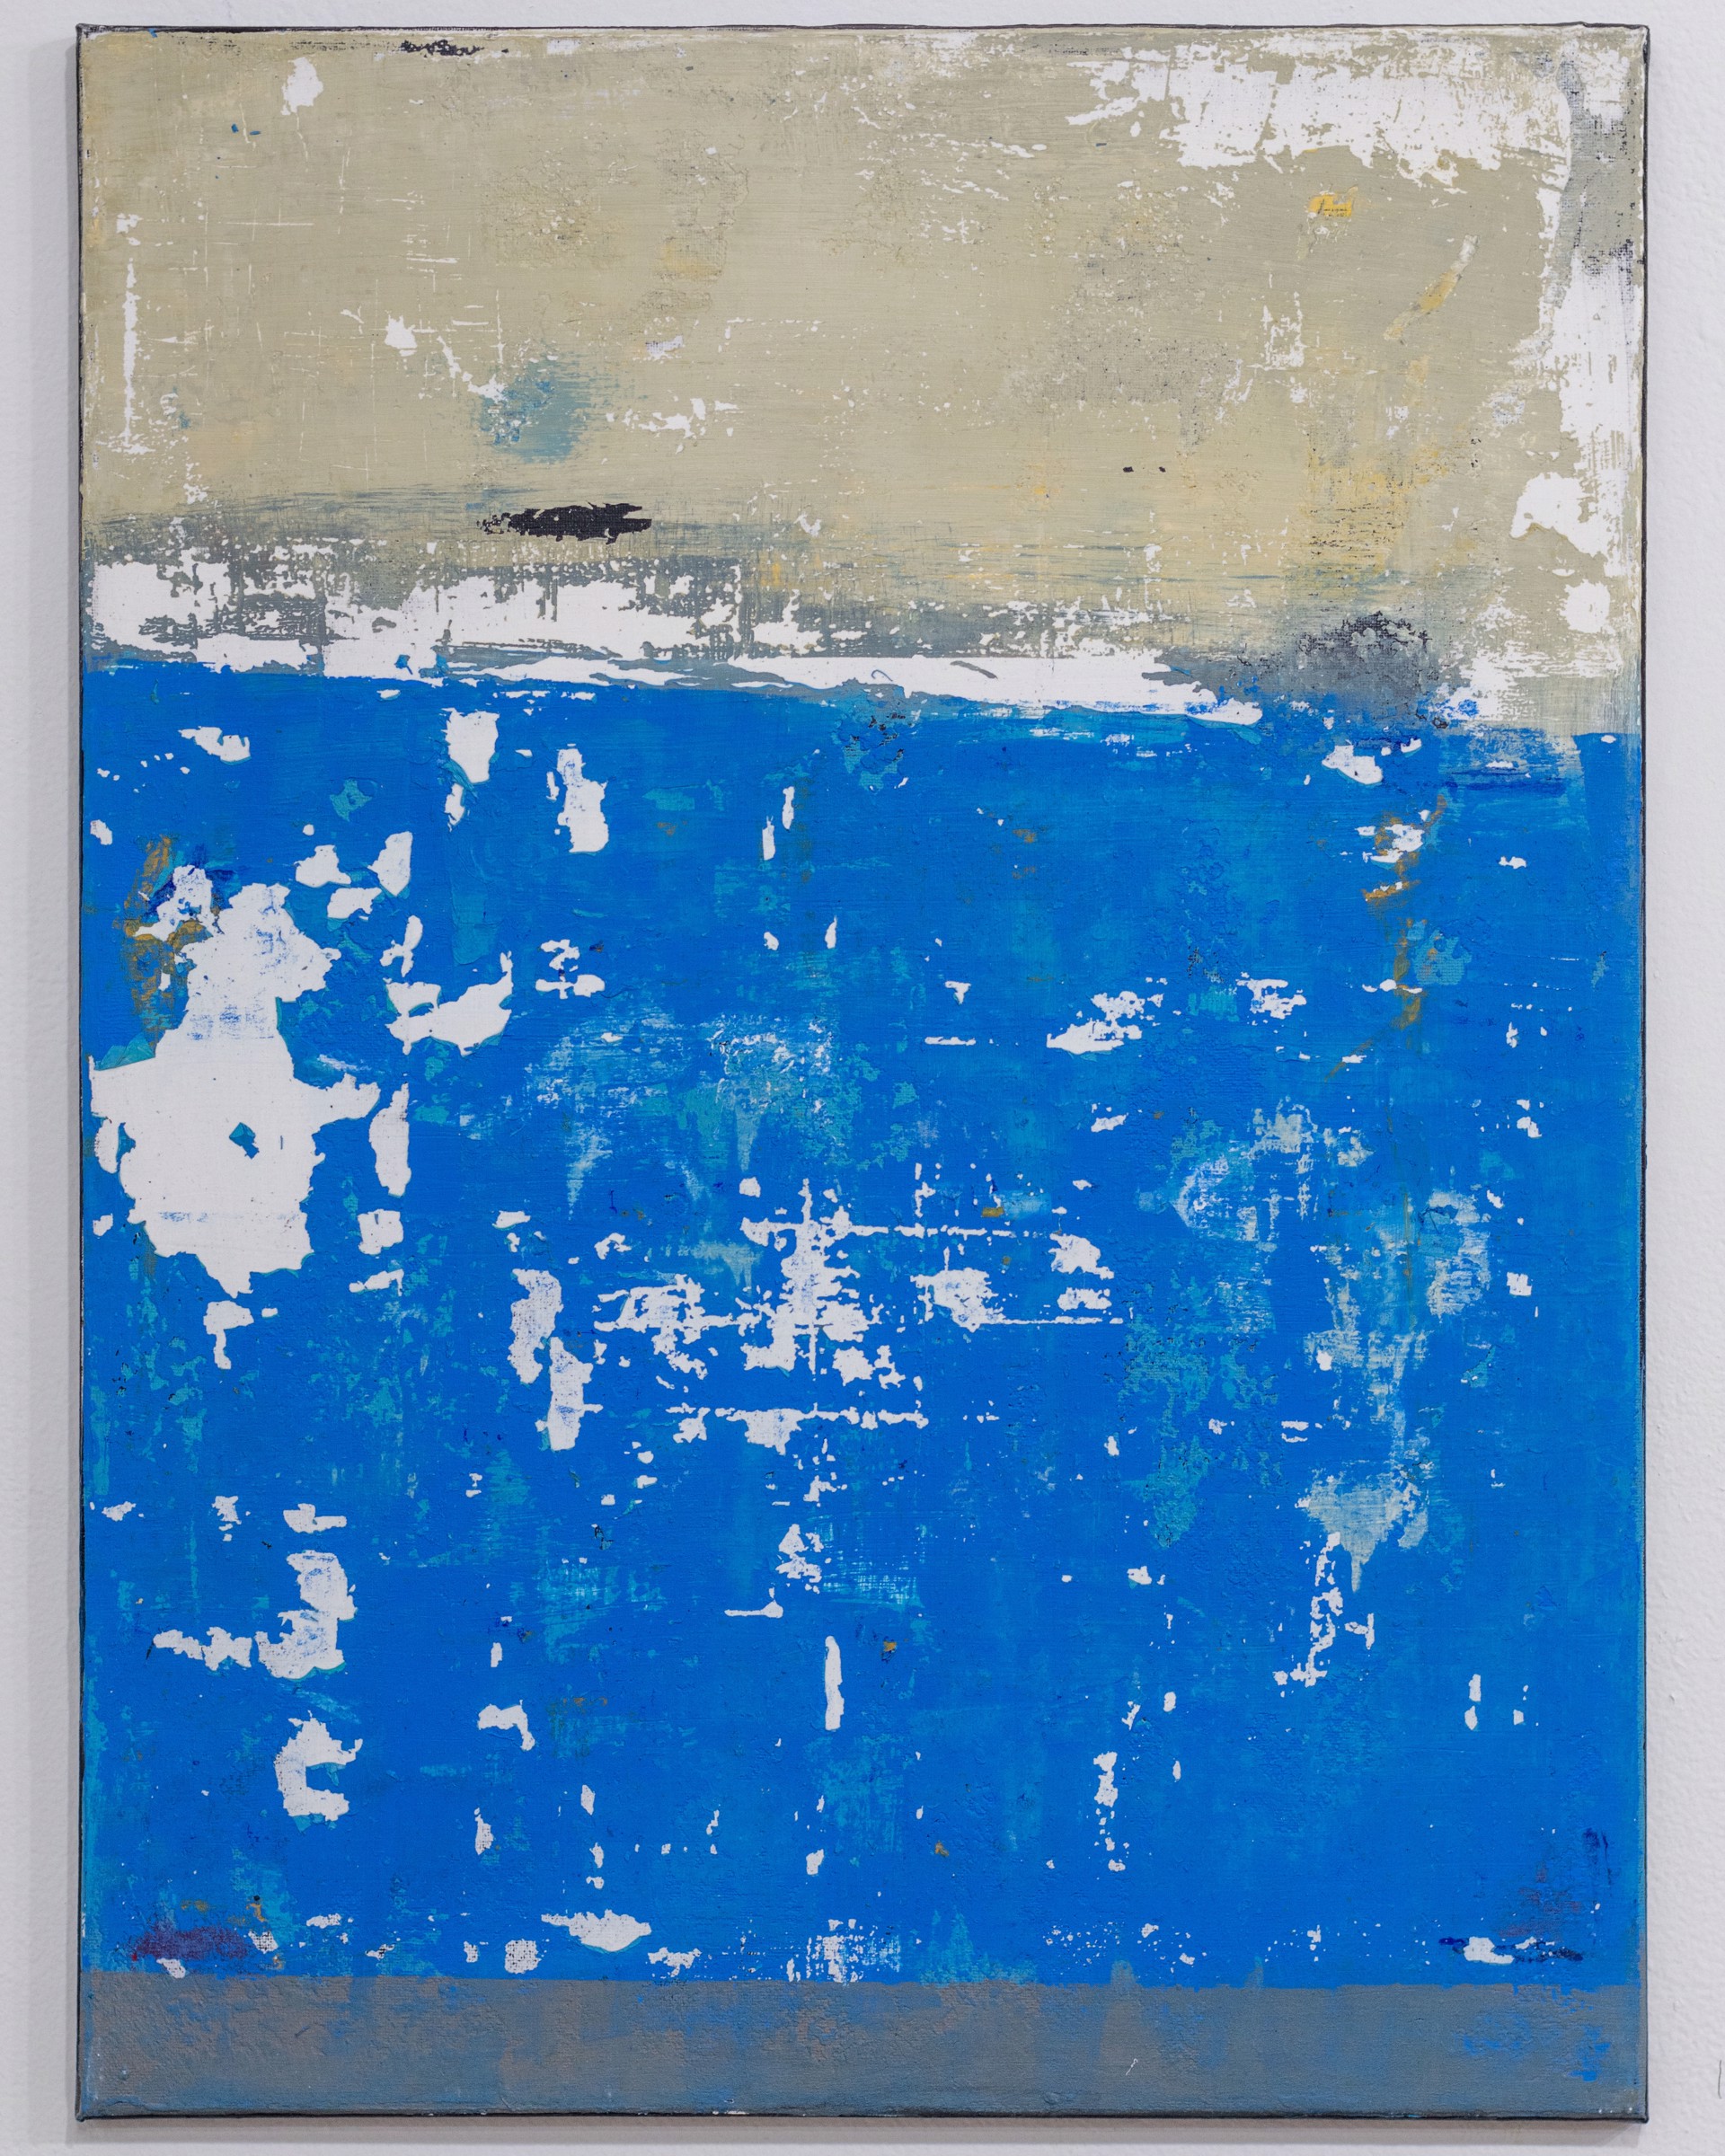 Sea, Land, & Blue by Shawnequa Linder